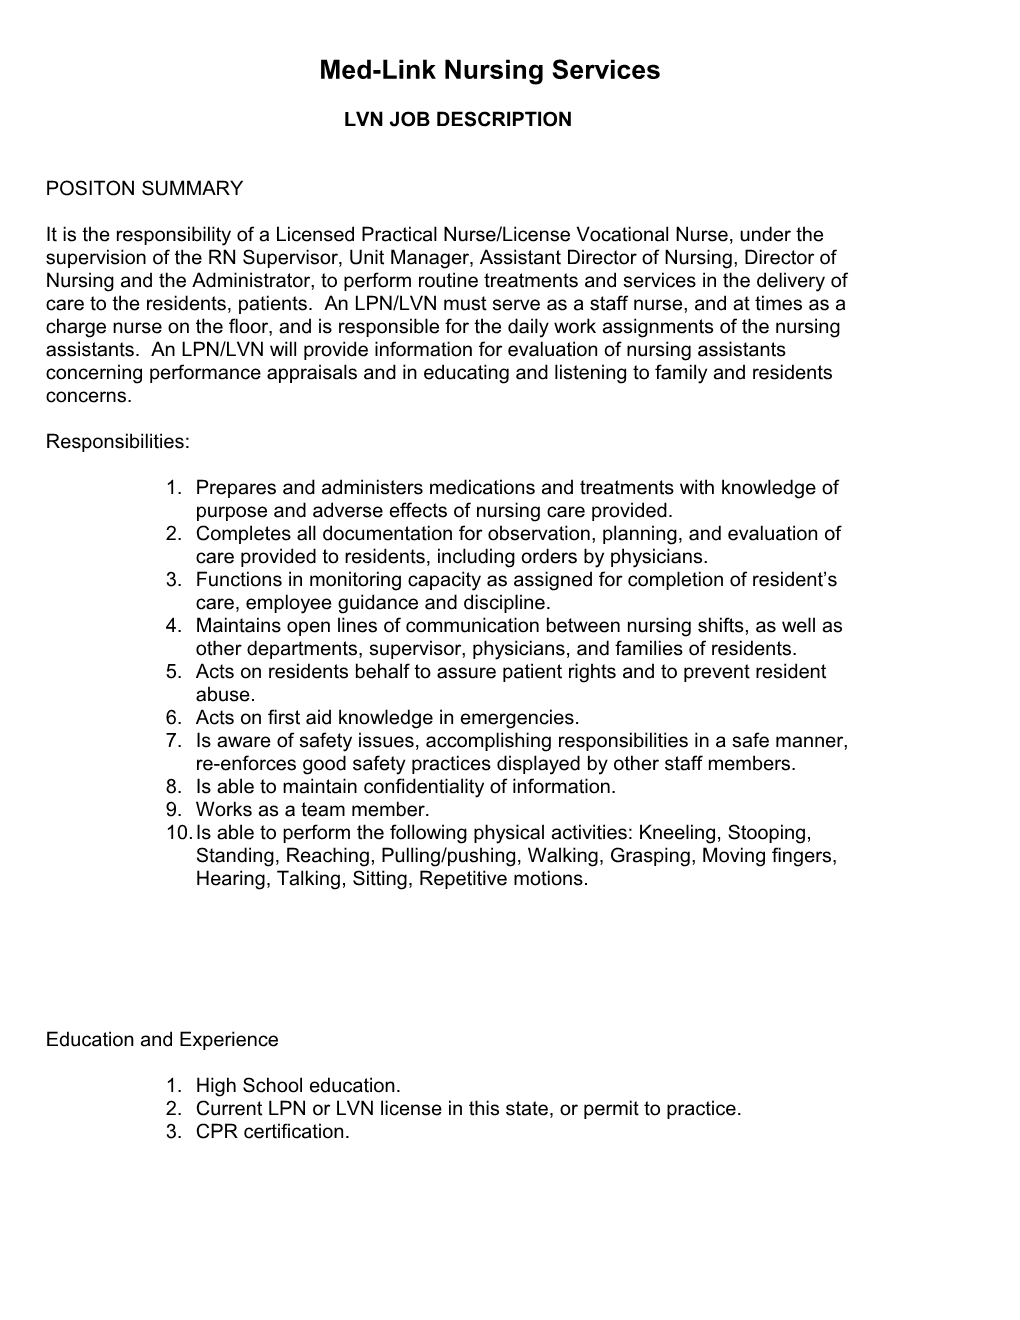 Sample Job Description of a LPN/LVN: Note* the Jobs Descriptions Must Reflect the Laws